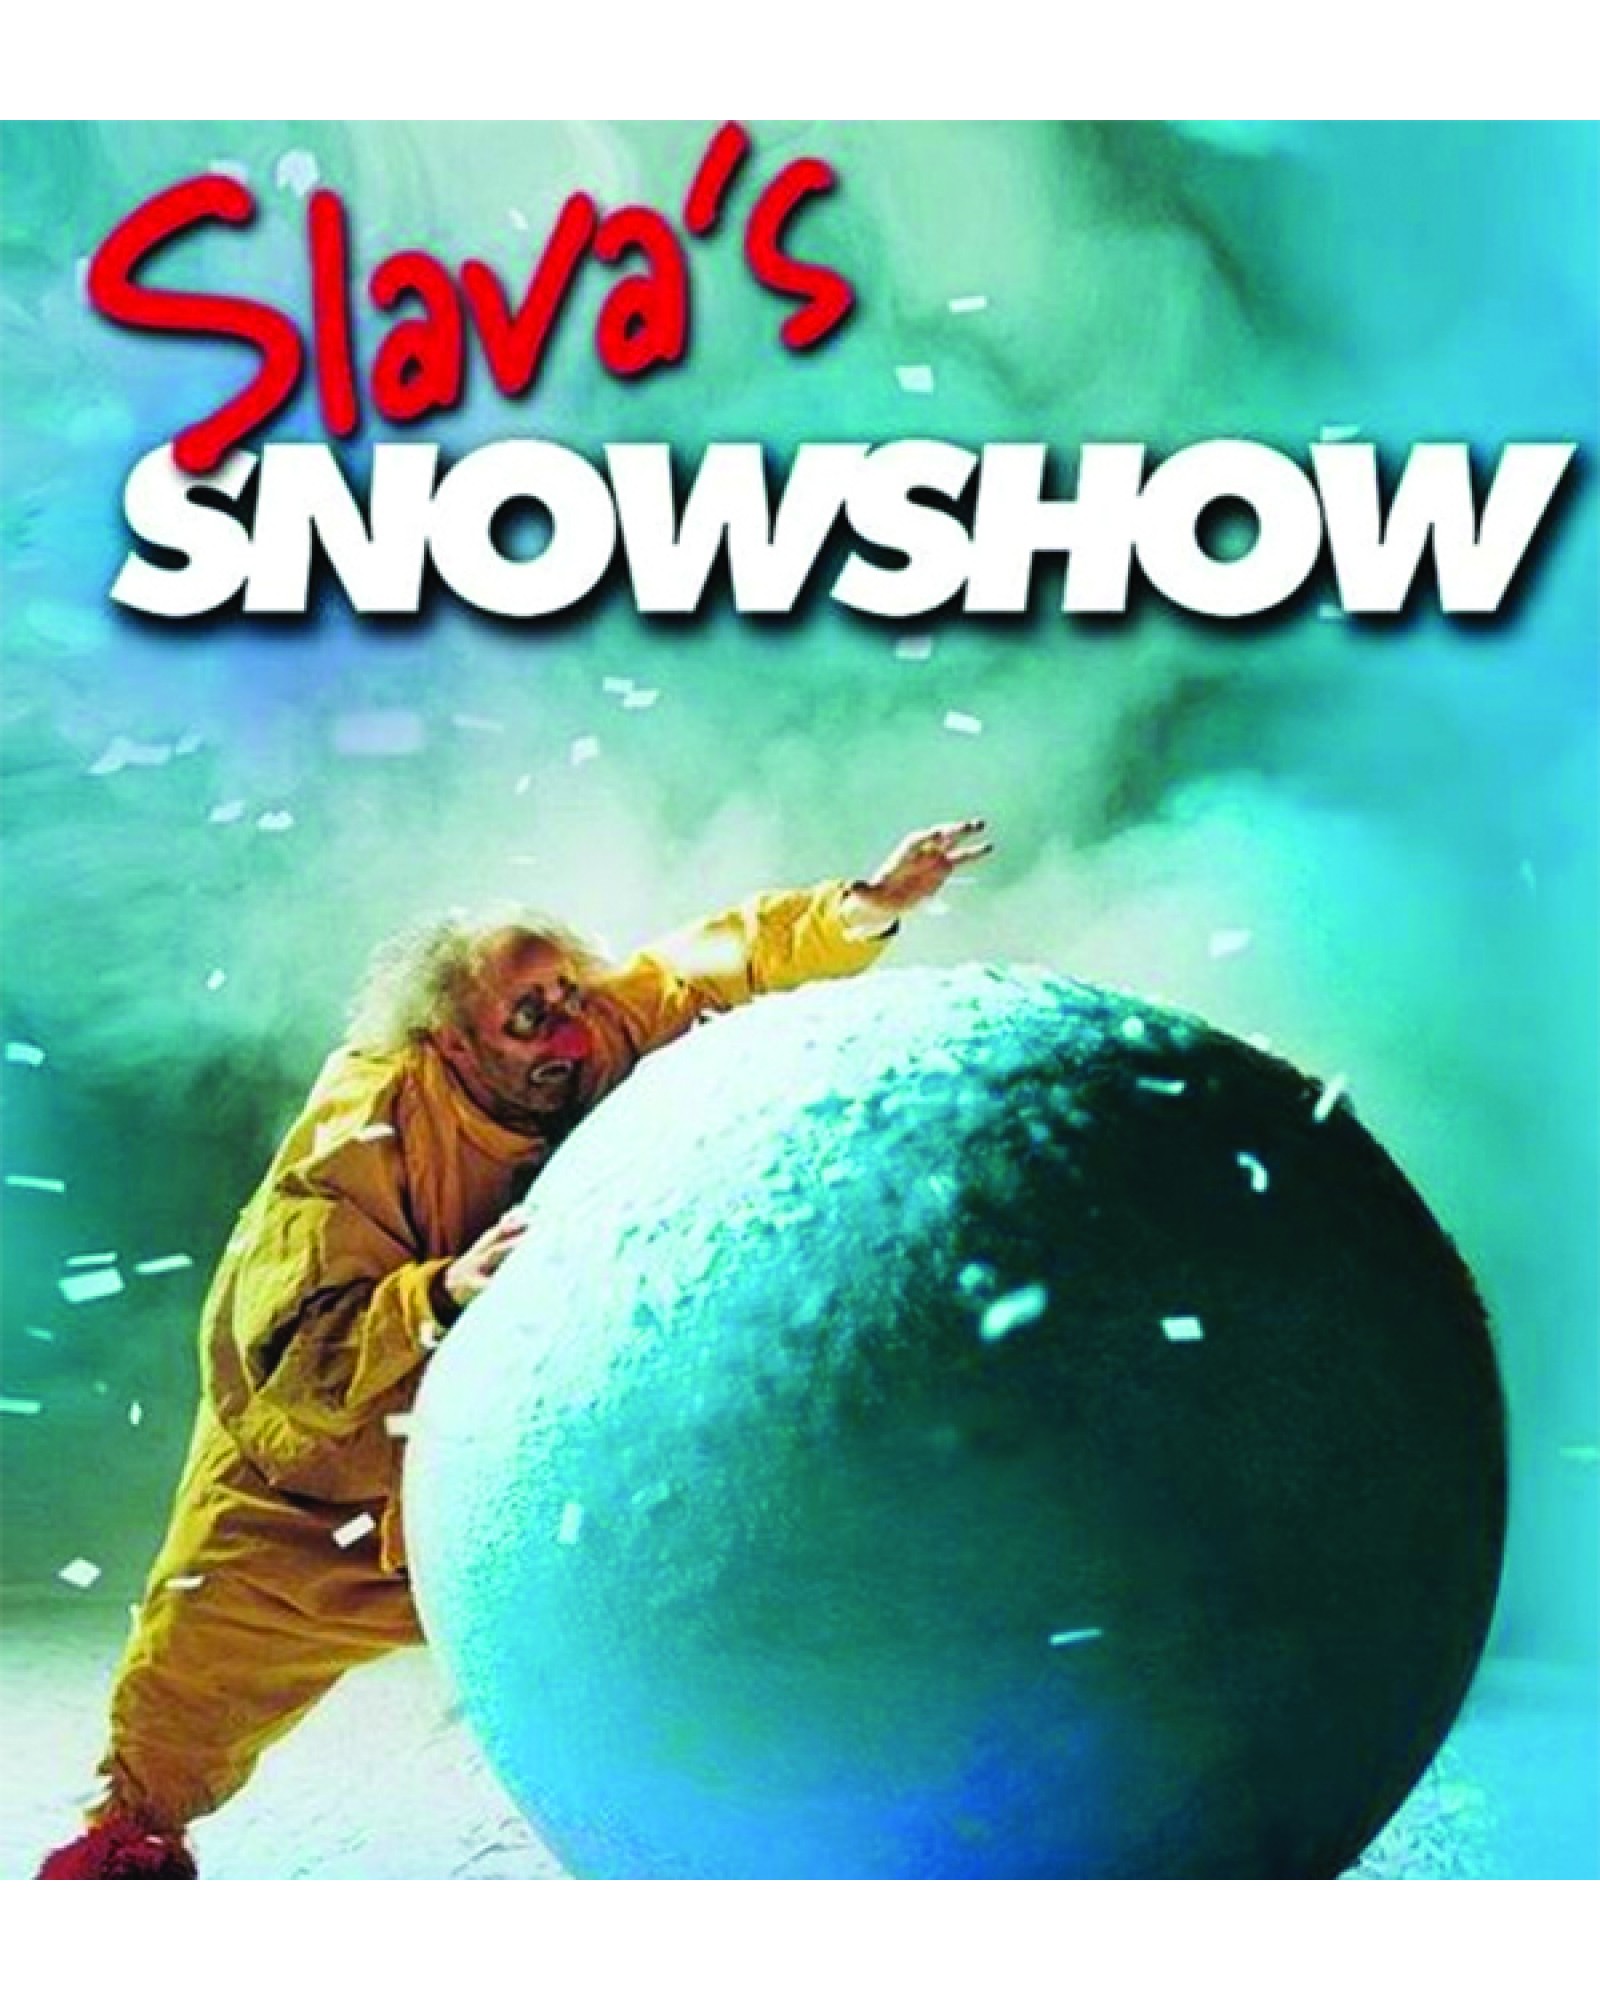 Slava's SNOWSHOW